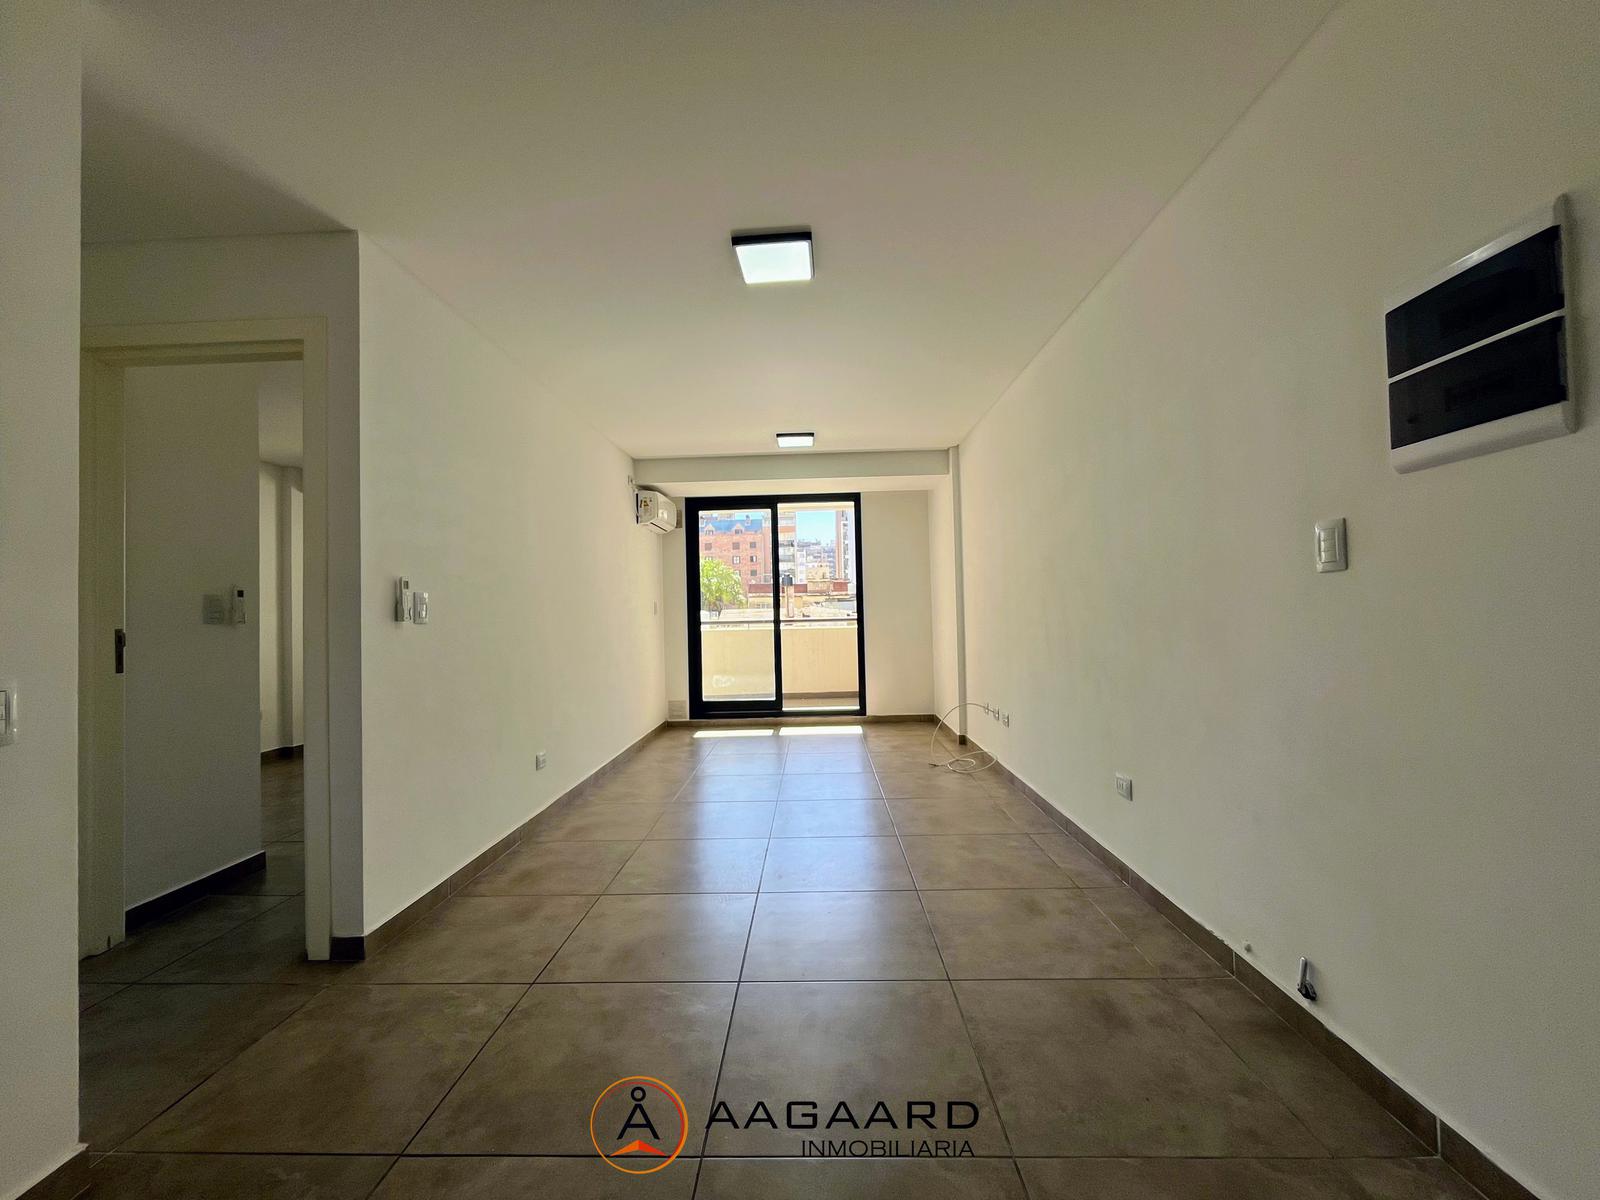 #5040362 | Sale | Apartment | Nueva Cordoba (AAGAARD INMOBILIARIA)